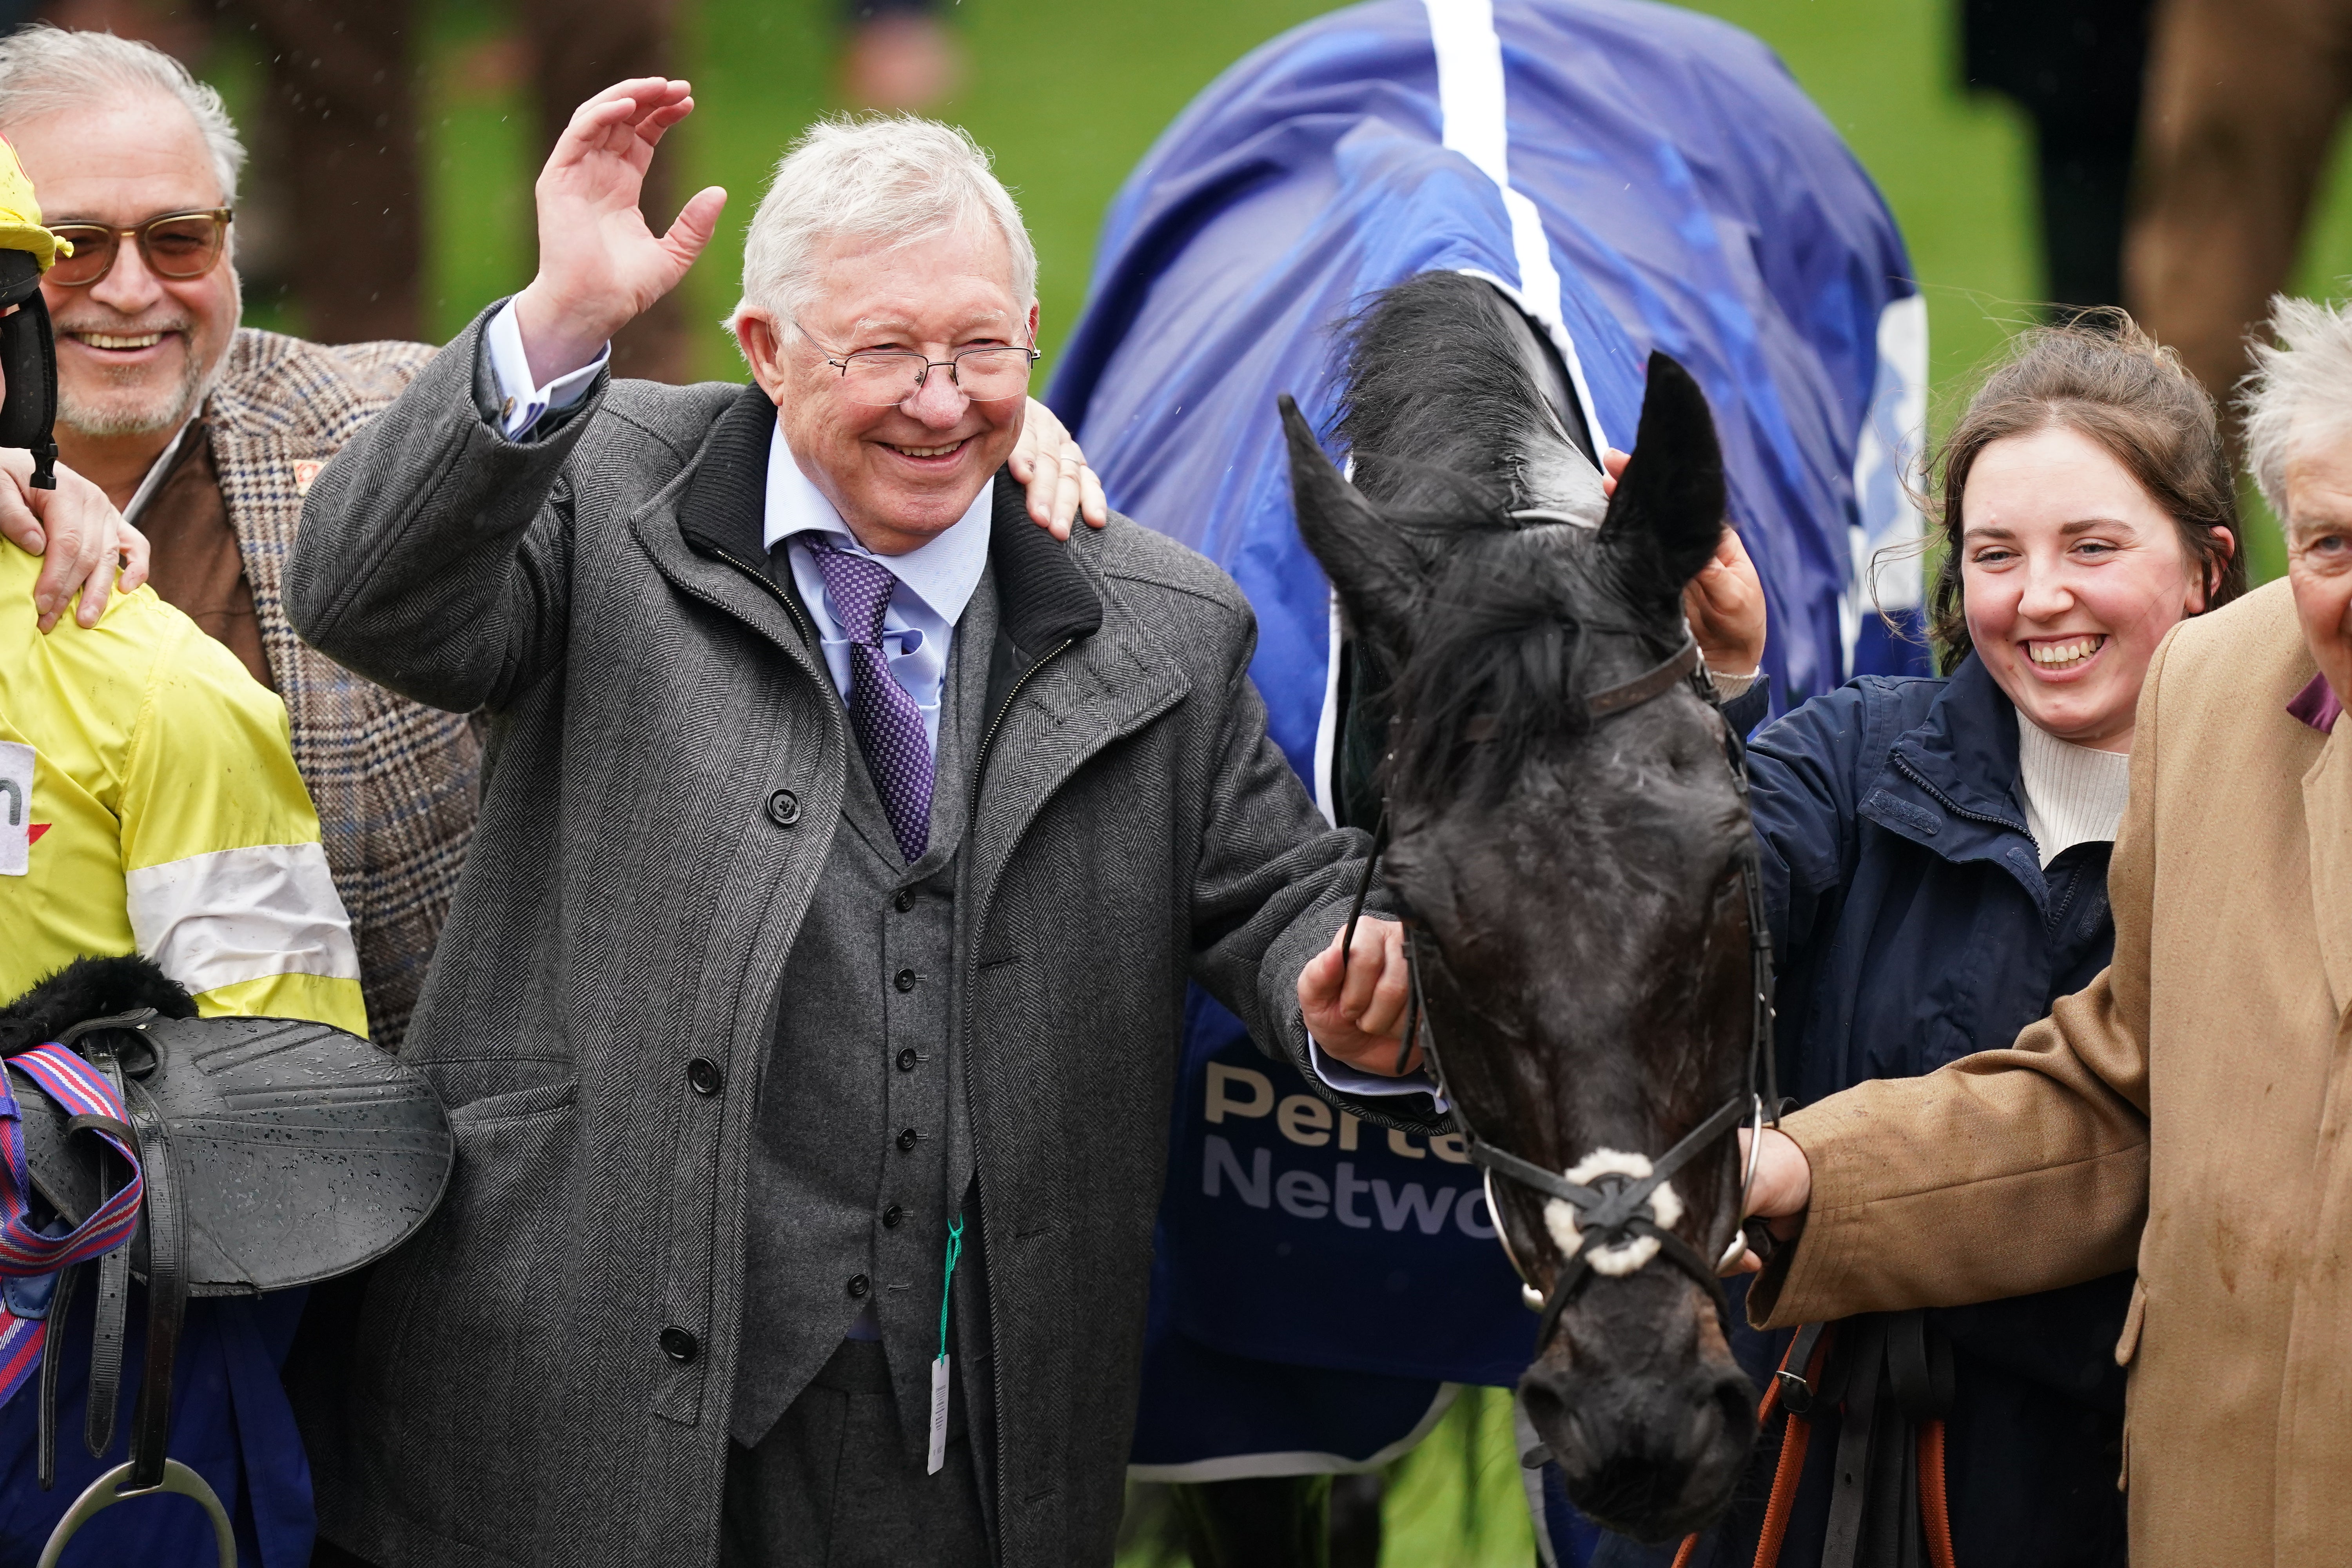 Sir Alex Ferguson celebrates his horse Monmiral winning the Pertemps Network Handicap Hurdle